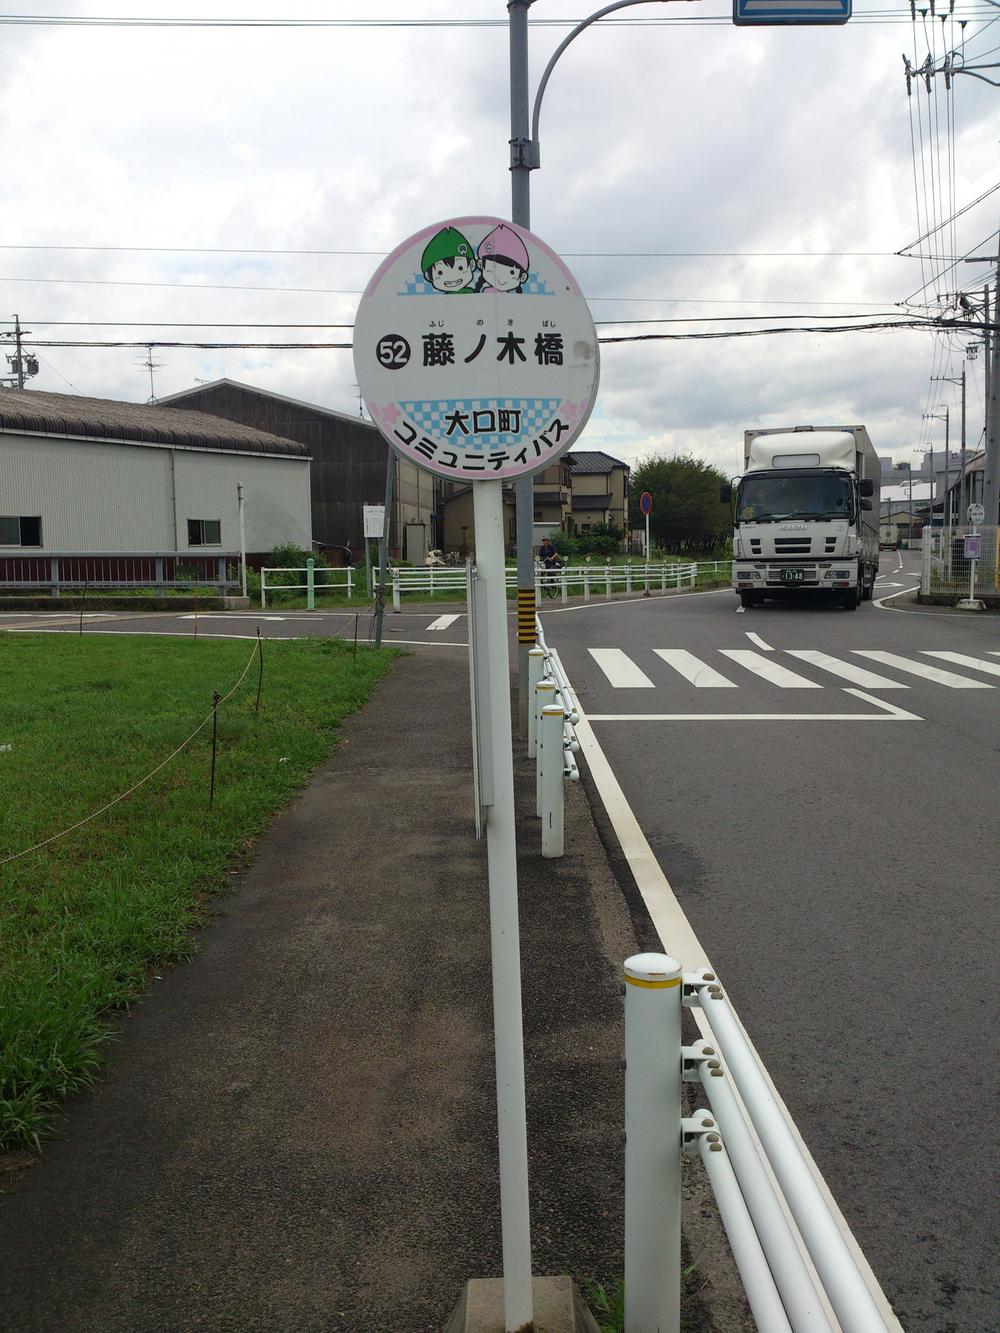 Other Environmental Photo. Large-cho community bus "Fujinoki Bridge" stop up to 200m